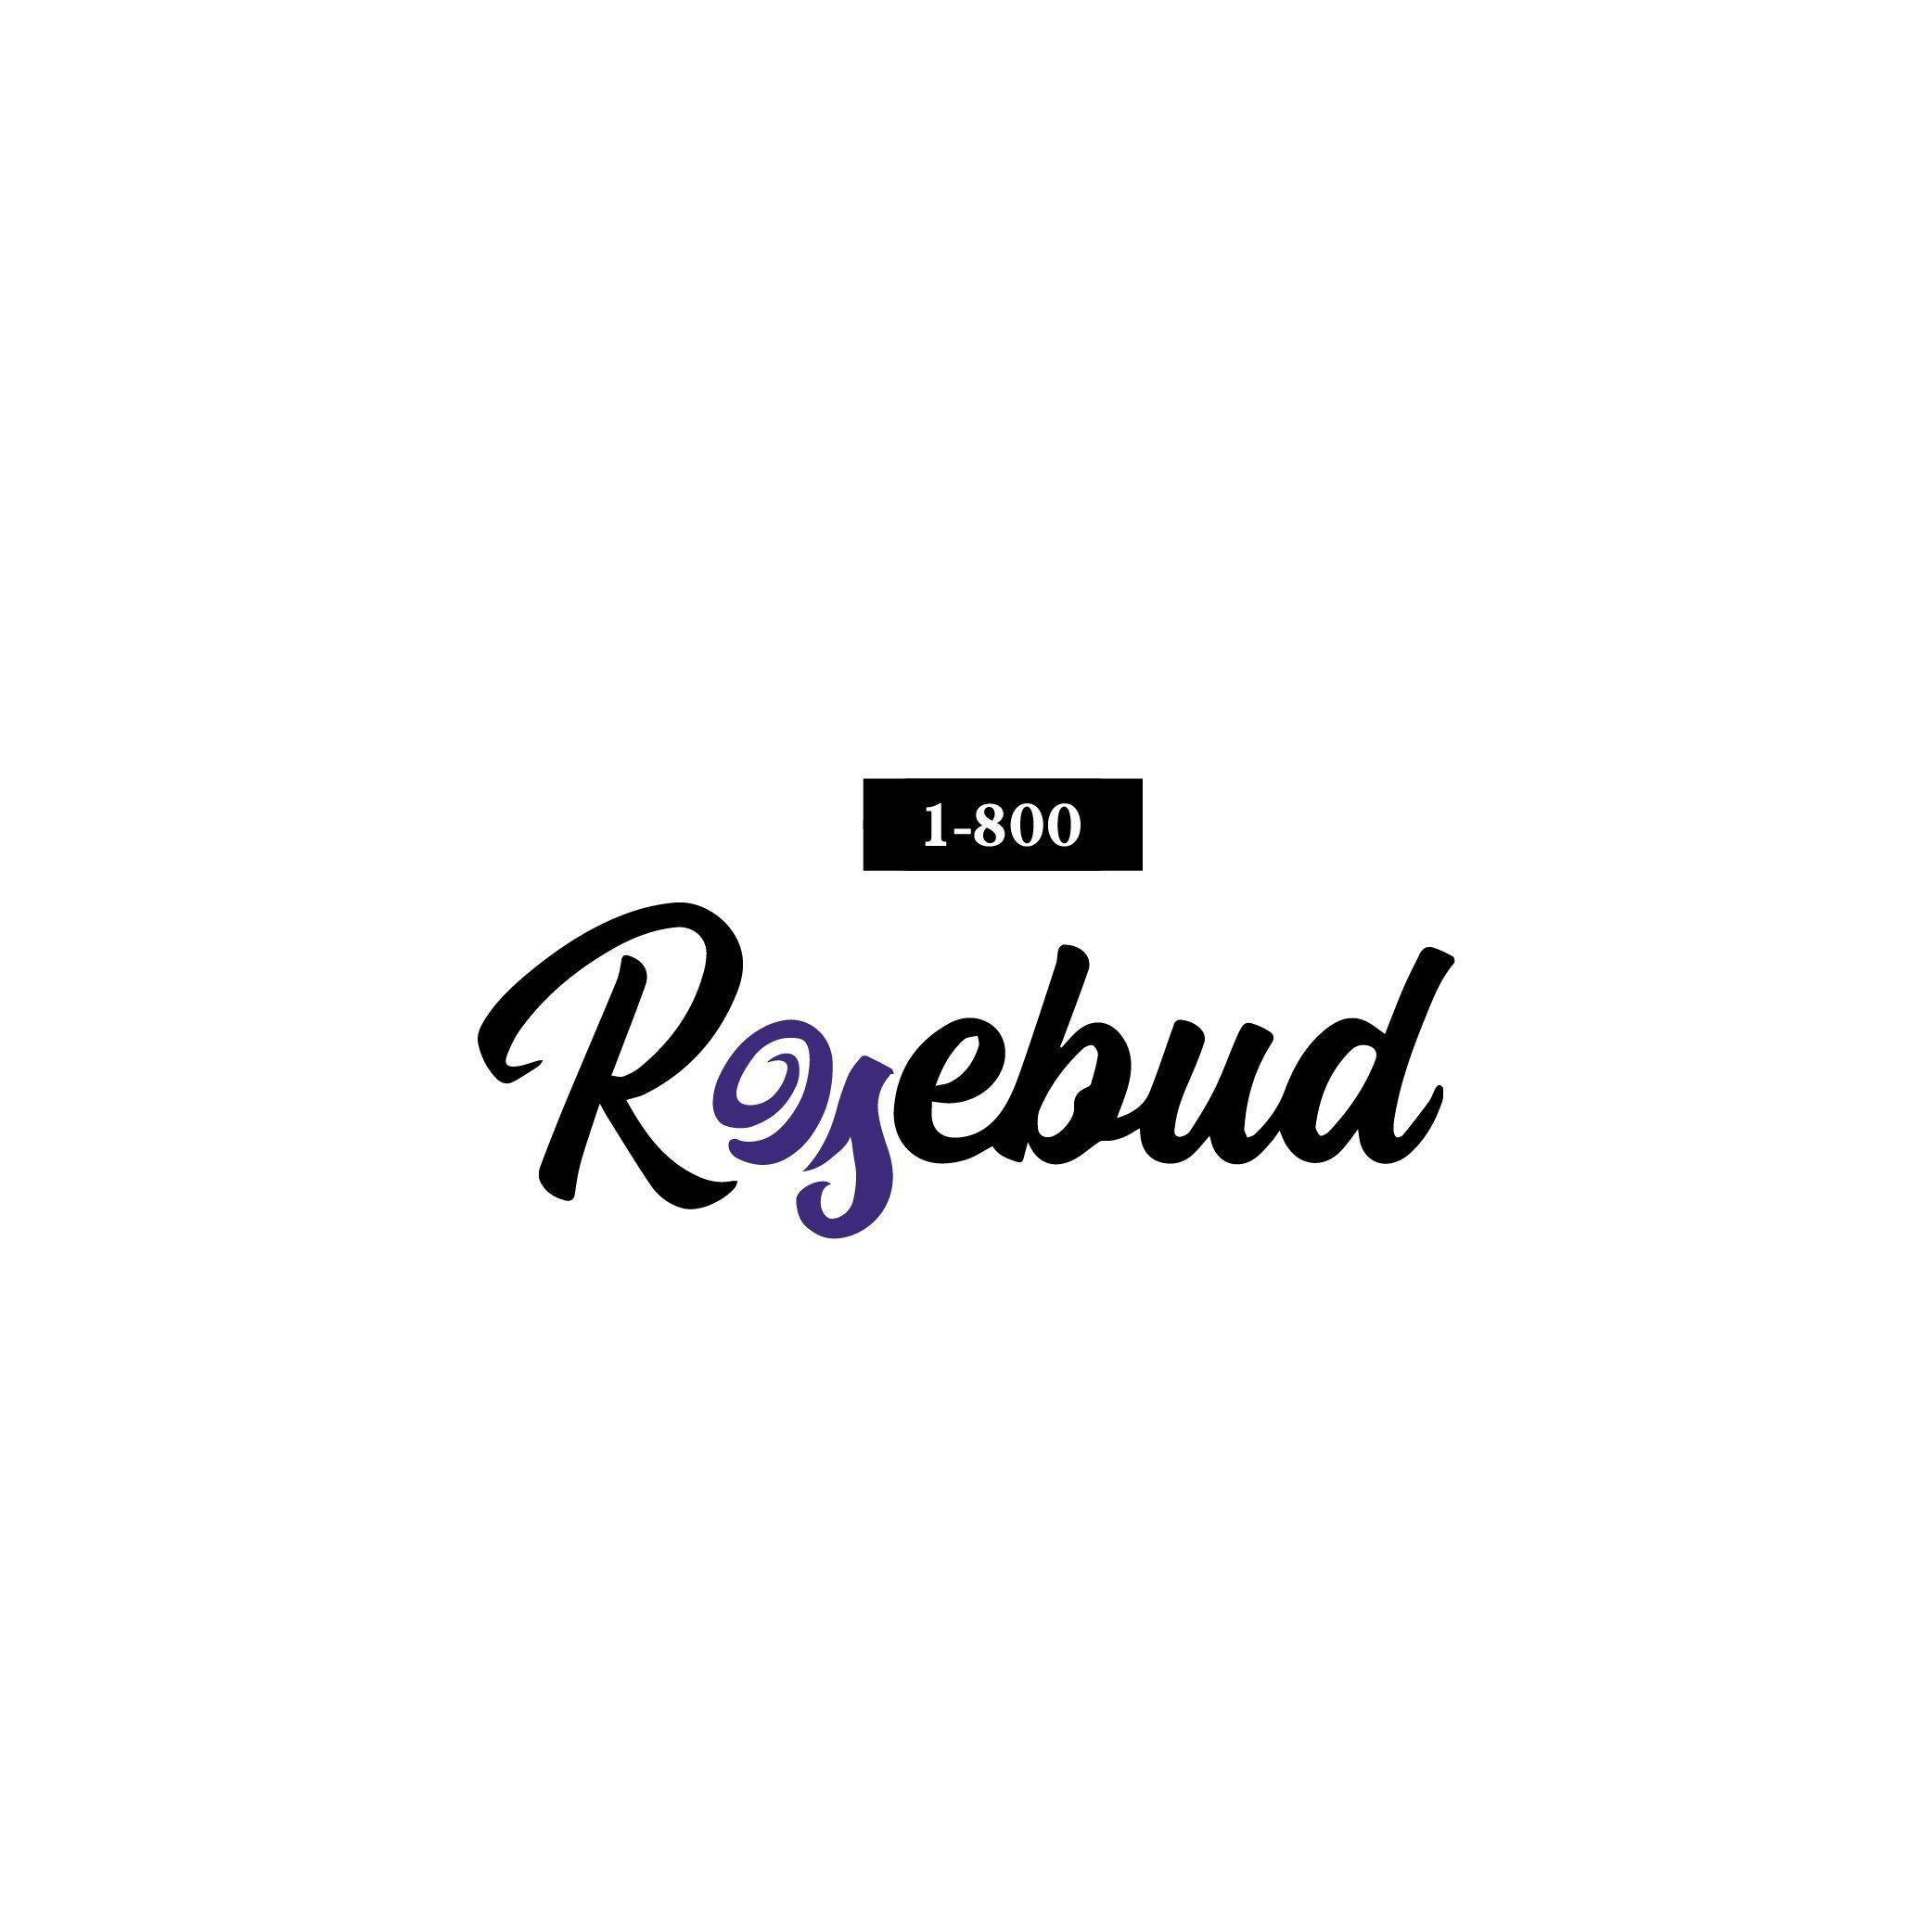 Rosebud Logo - Rosebud logo thirty logos. thirty logos. Logos, Cool logo, Logo design